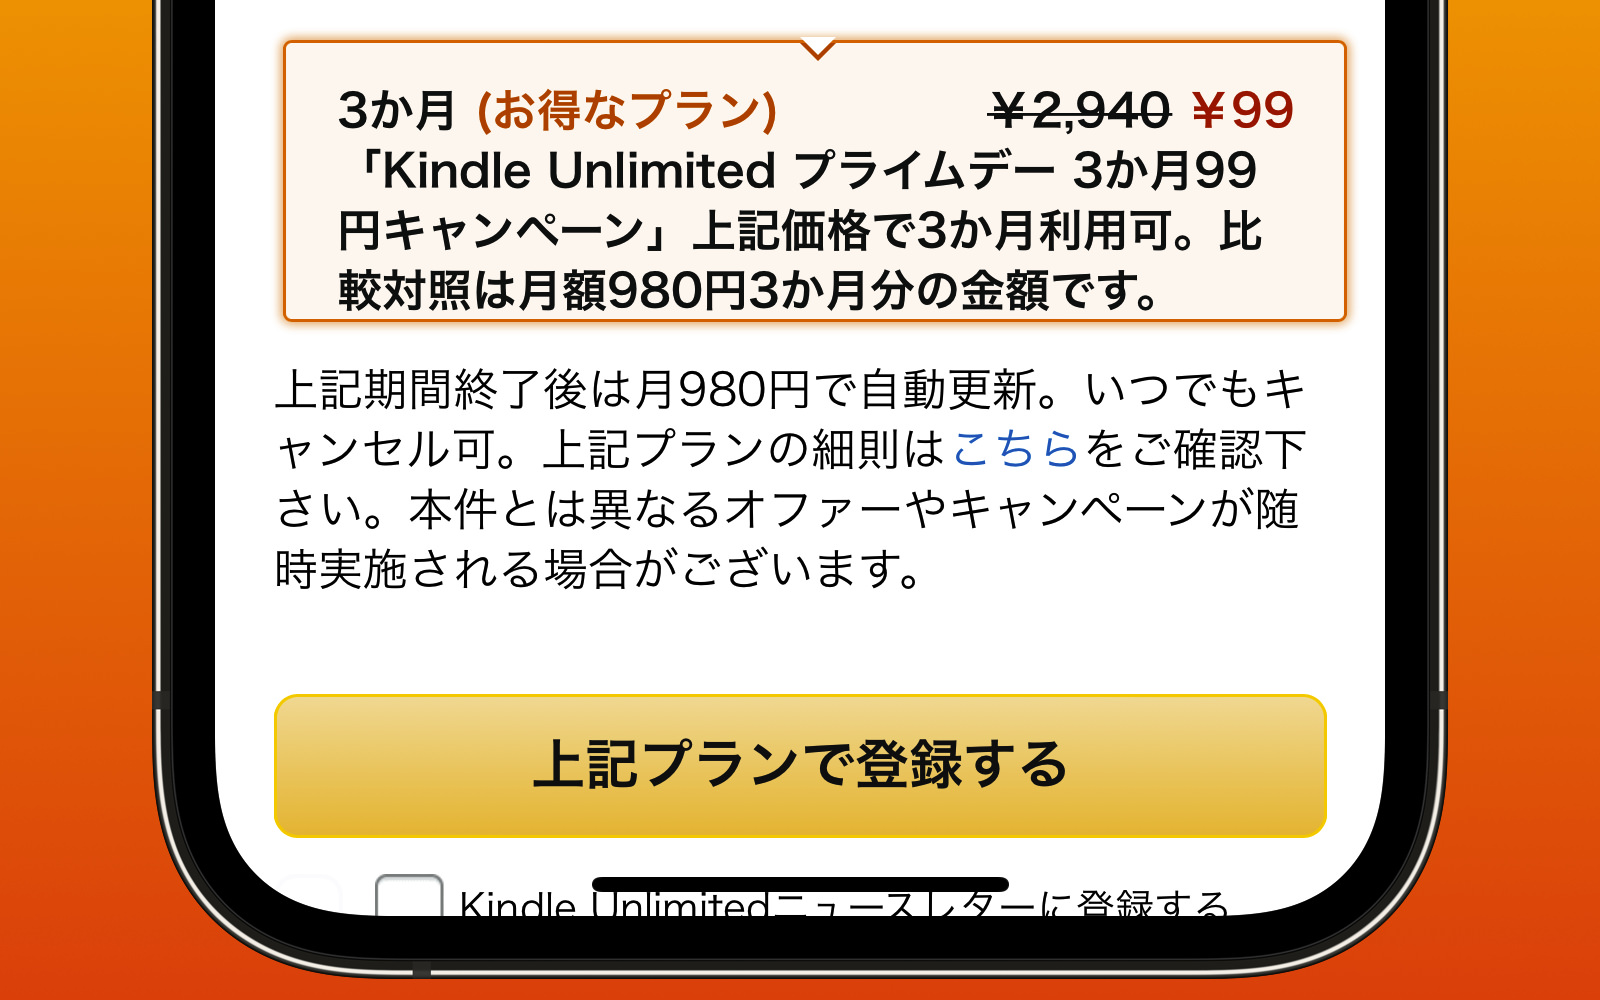 Kindle Unlimited PrimeDay 2022 Sale